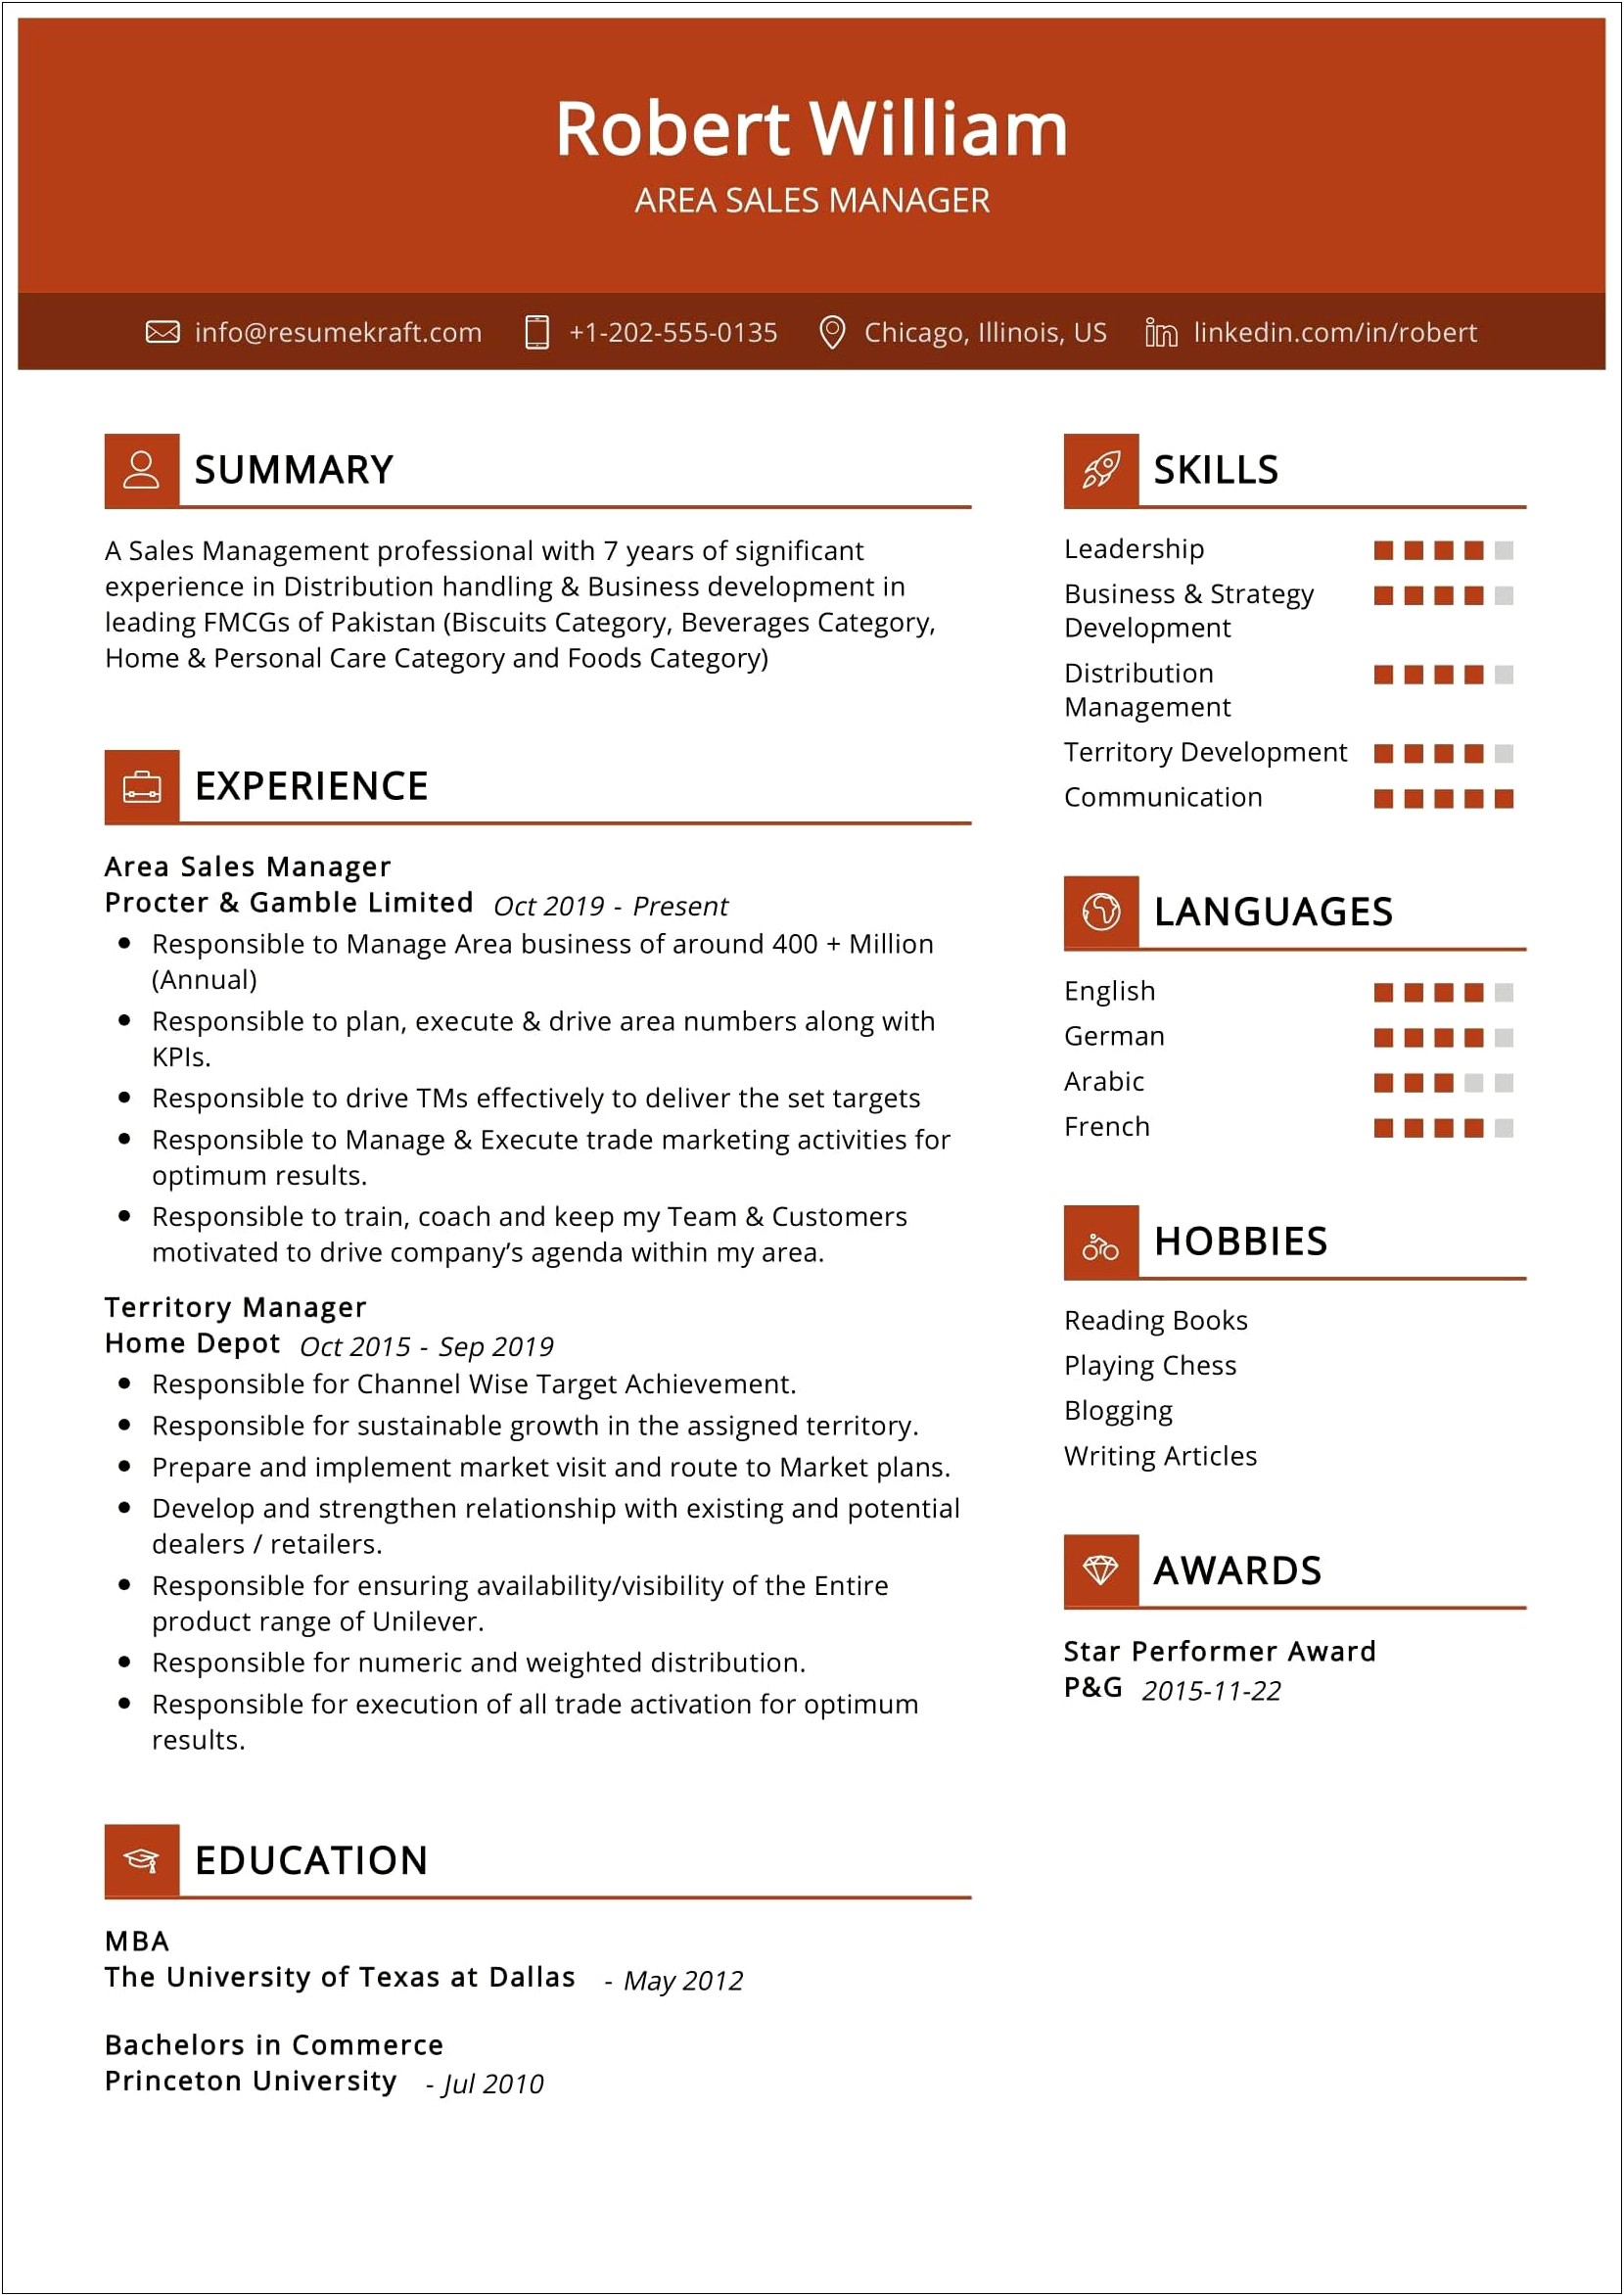 Job Description For Marketing Manager On Resumer